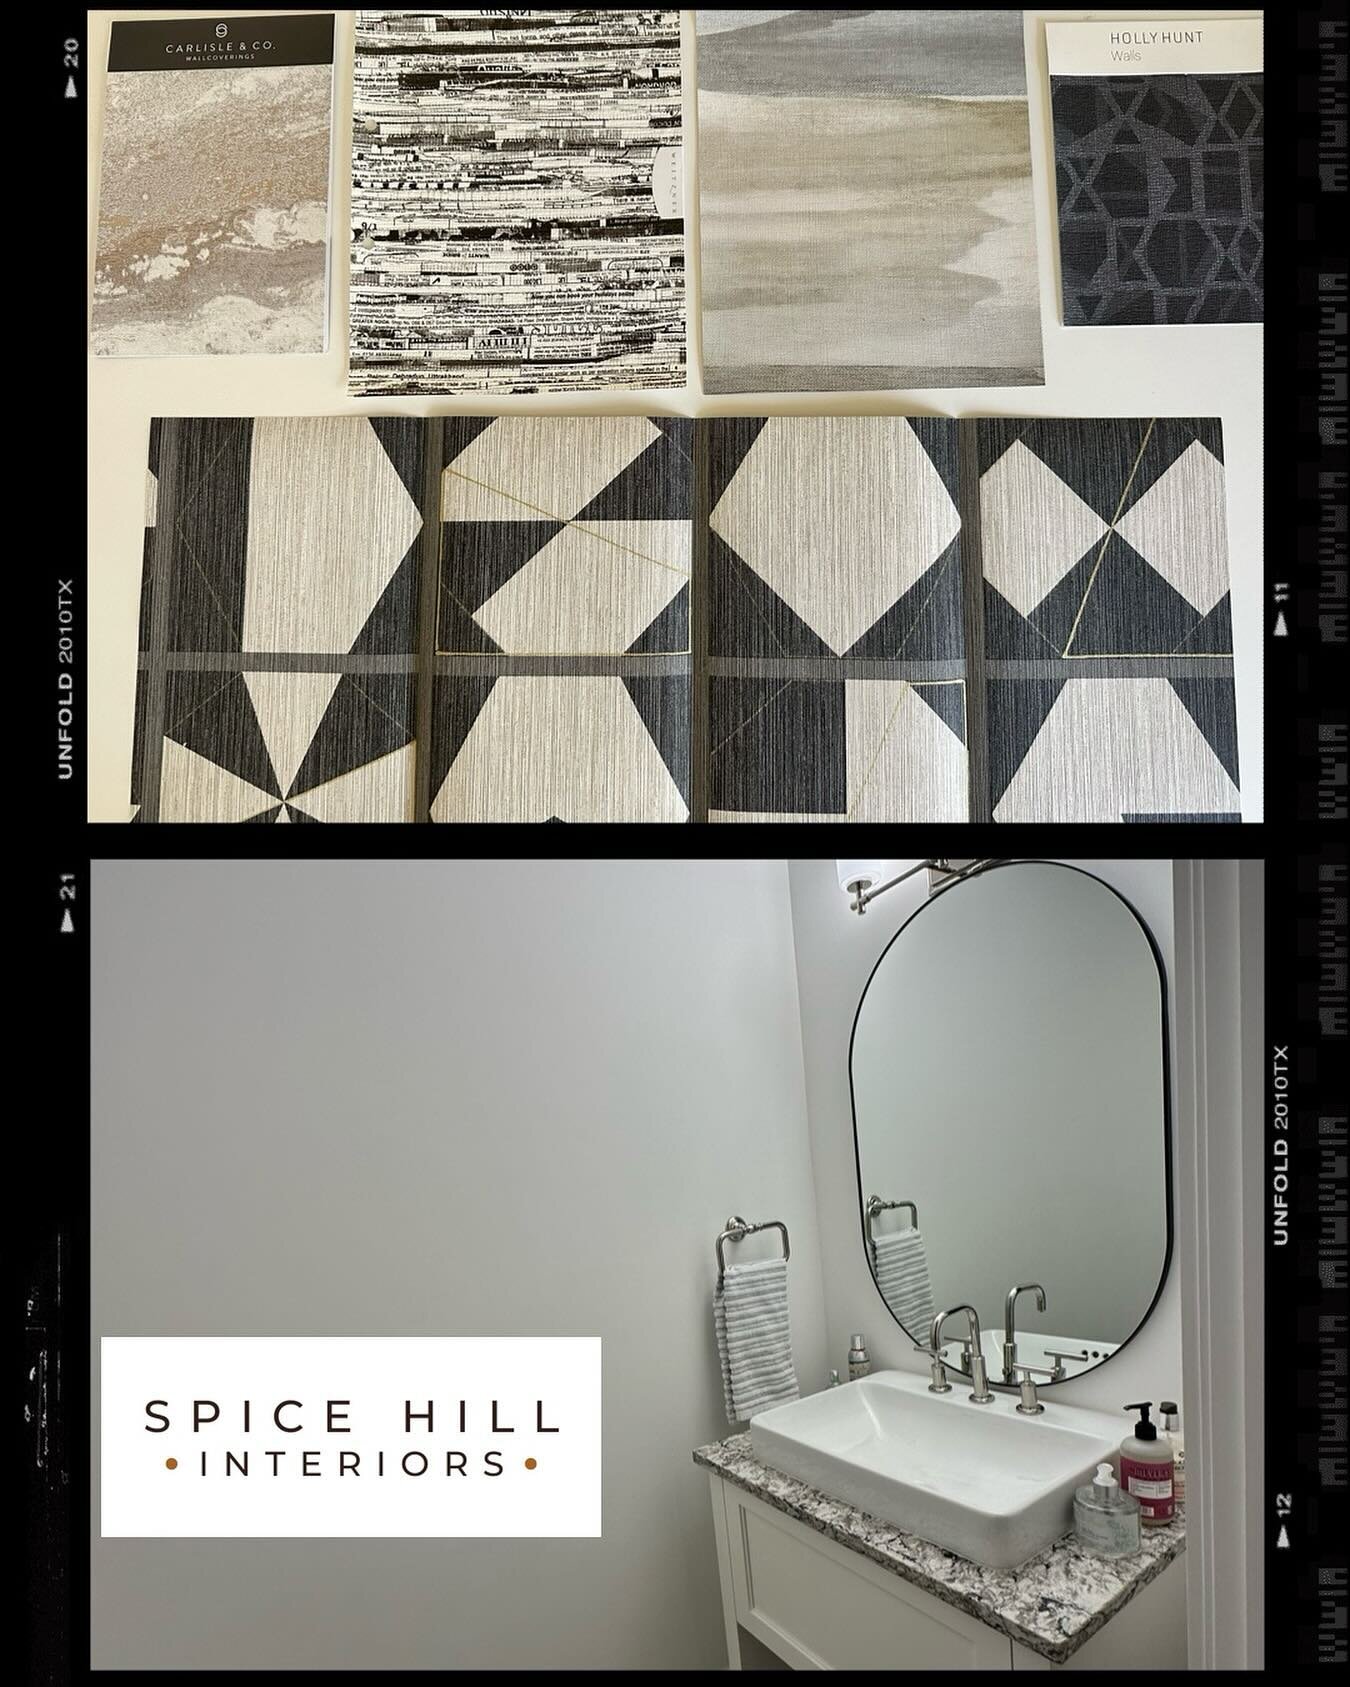 Powder Room Update.  Which wallpaper would you choose??
#westerchesterhomes #practicalinteriors #bathroominspiration #vinylwallpaper #spicehillinteriors